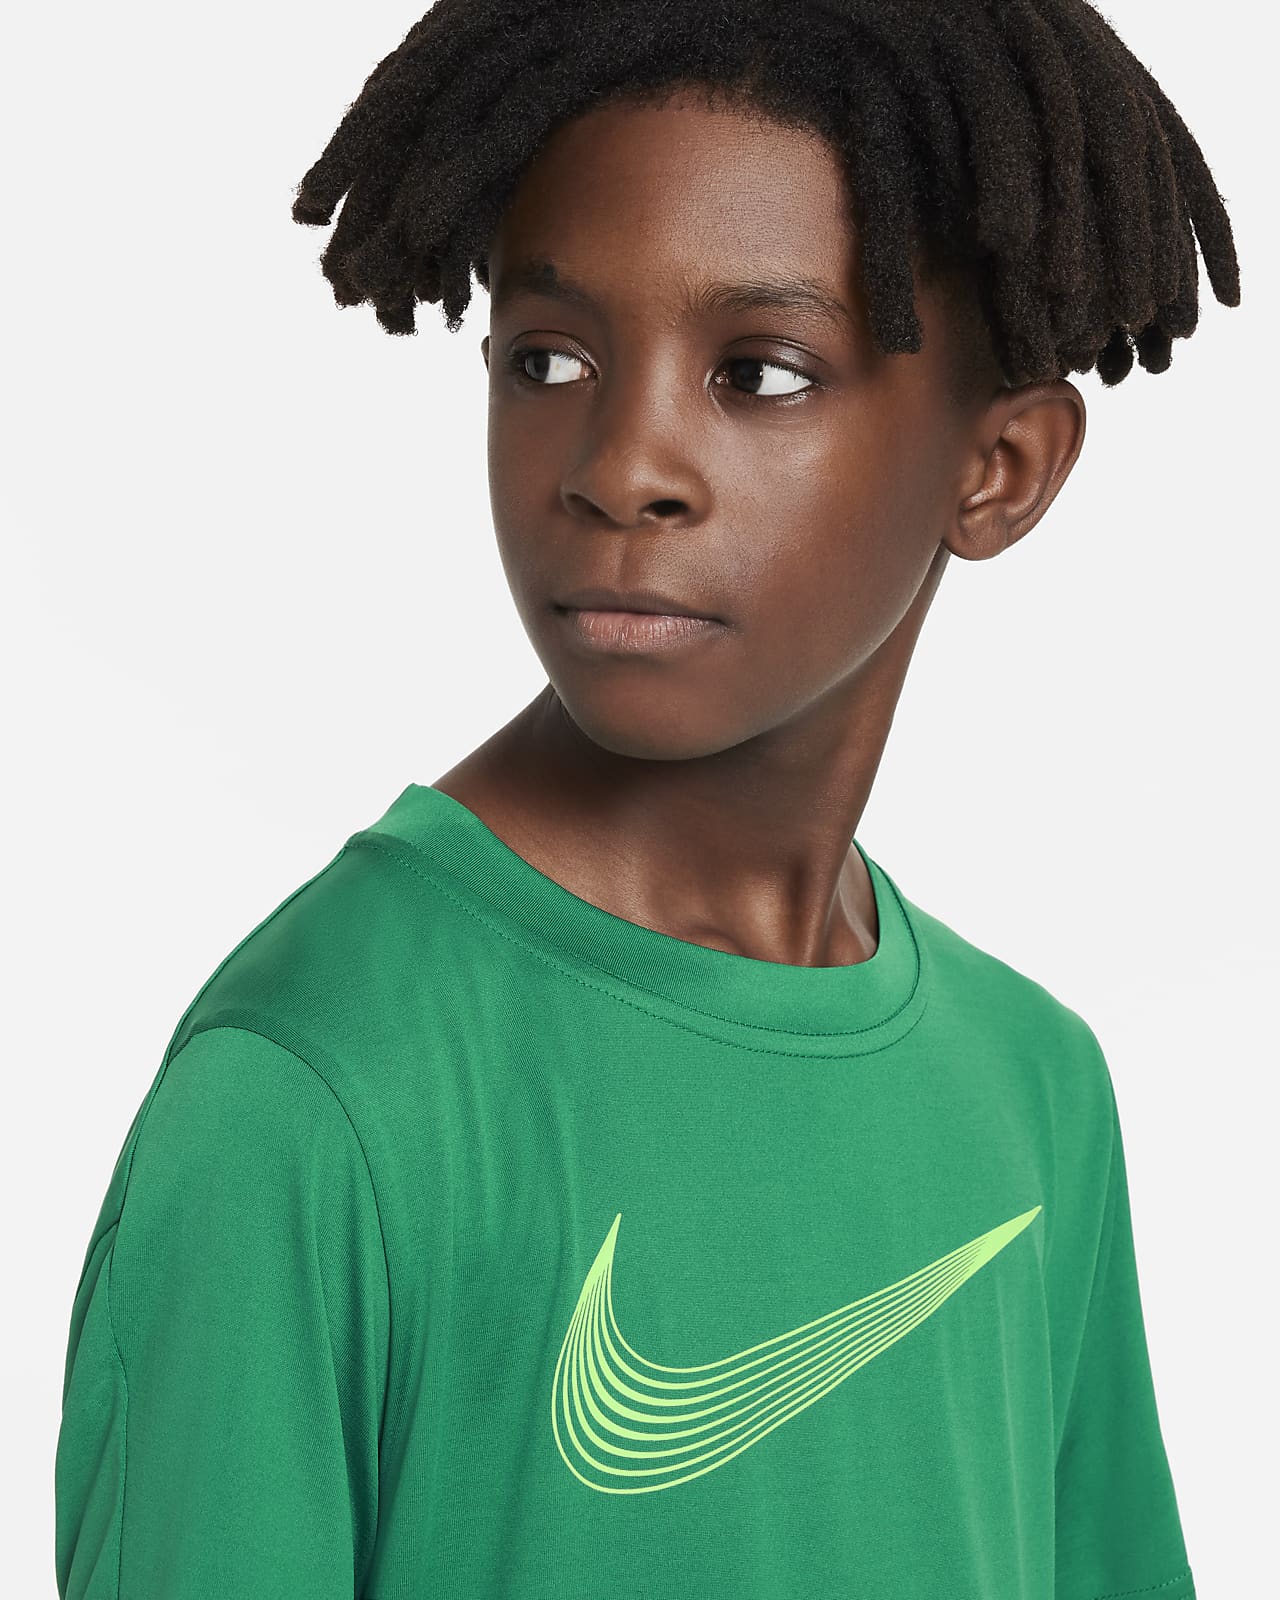 Nike Dri-FIT Big Kids' (Boys') Short-Sleeve Training Top. Nike.com